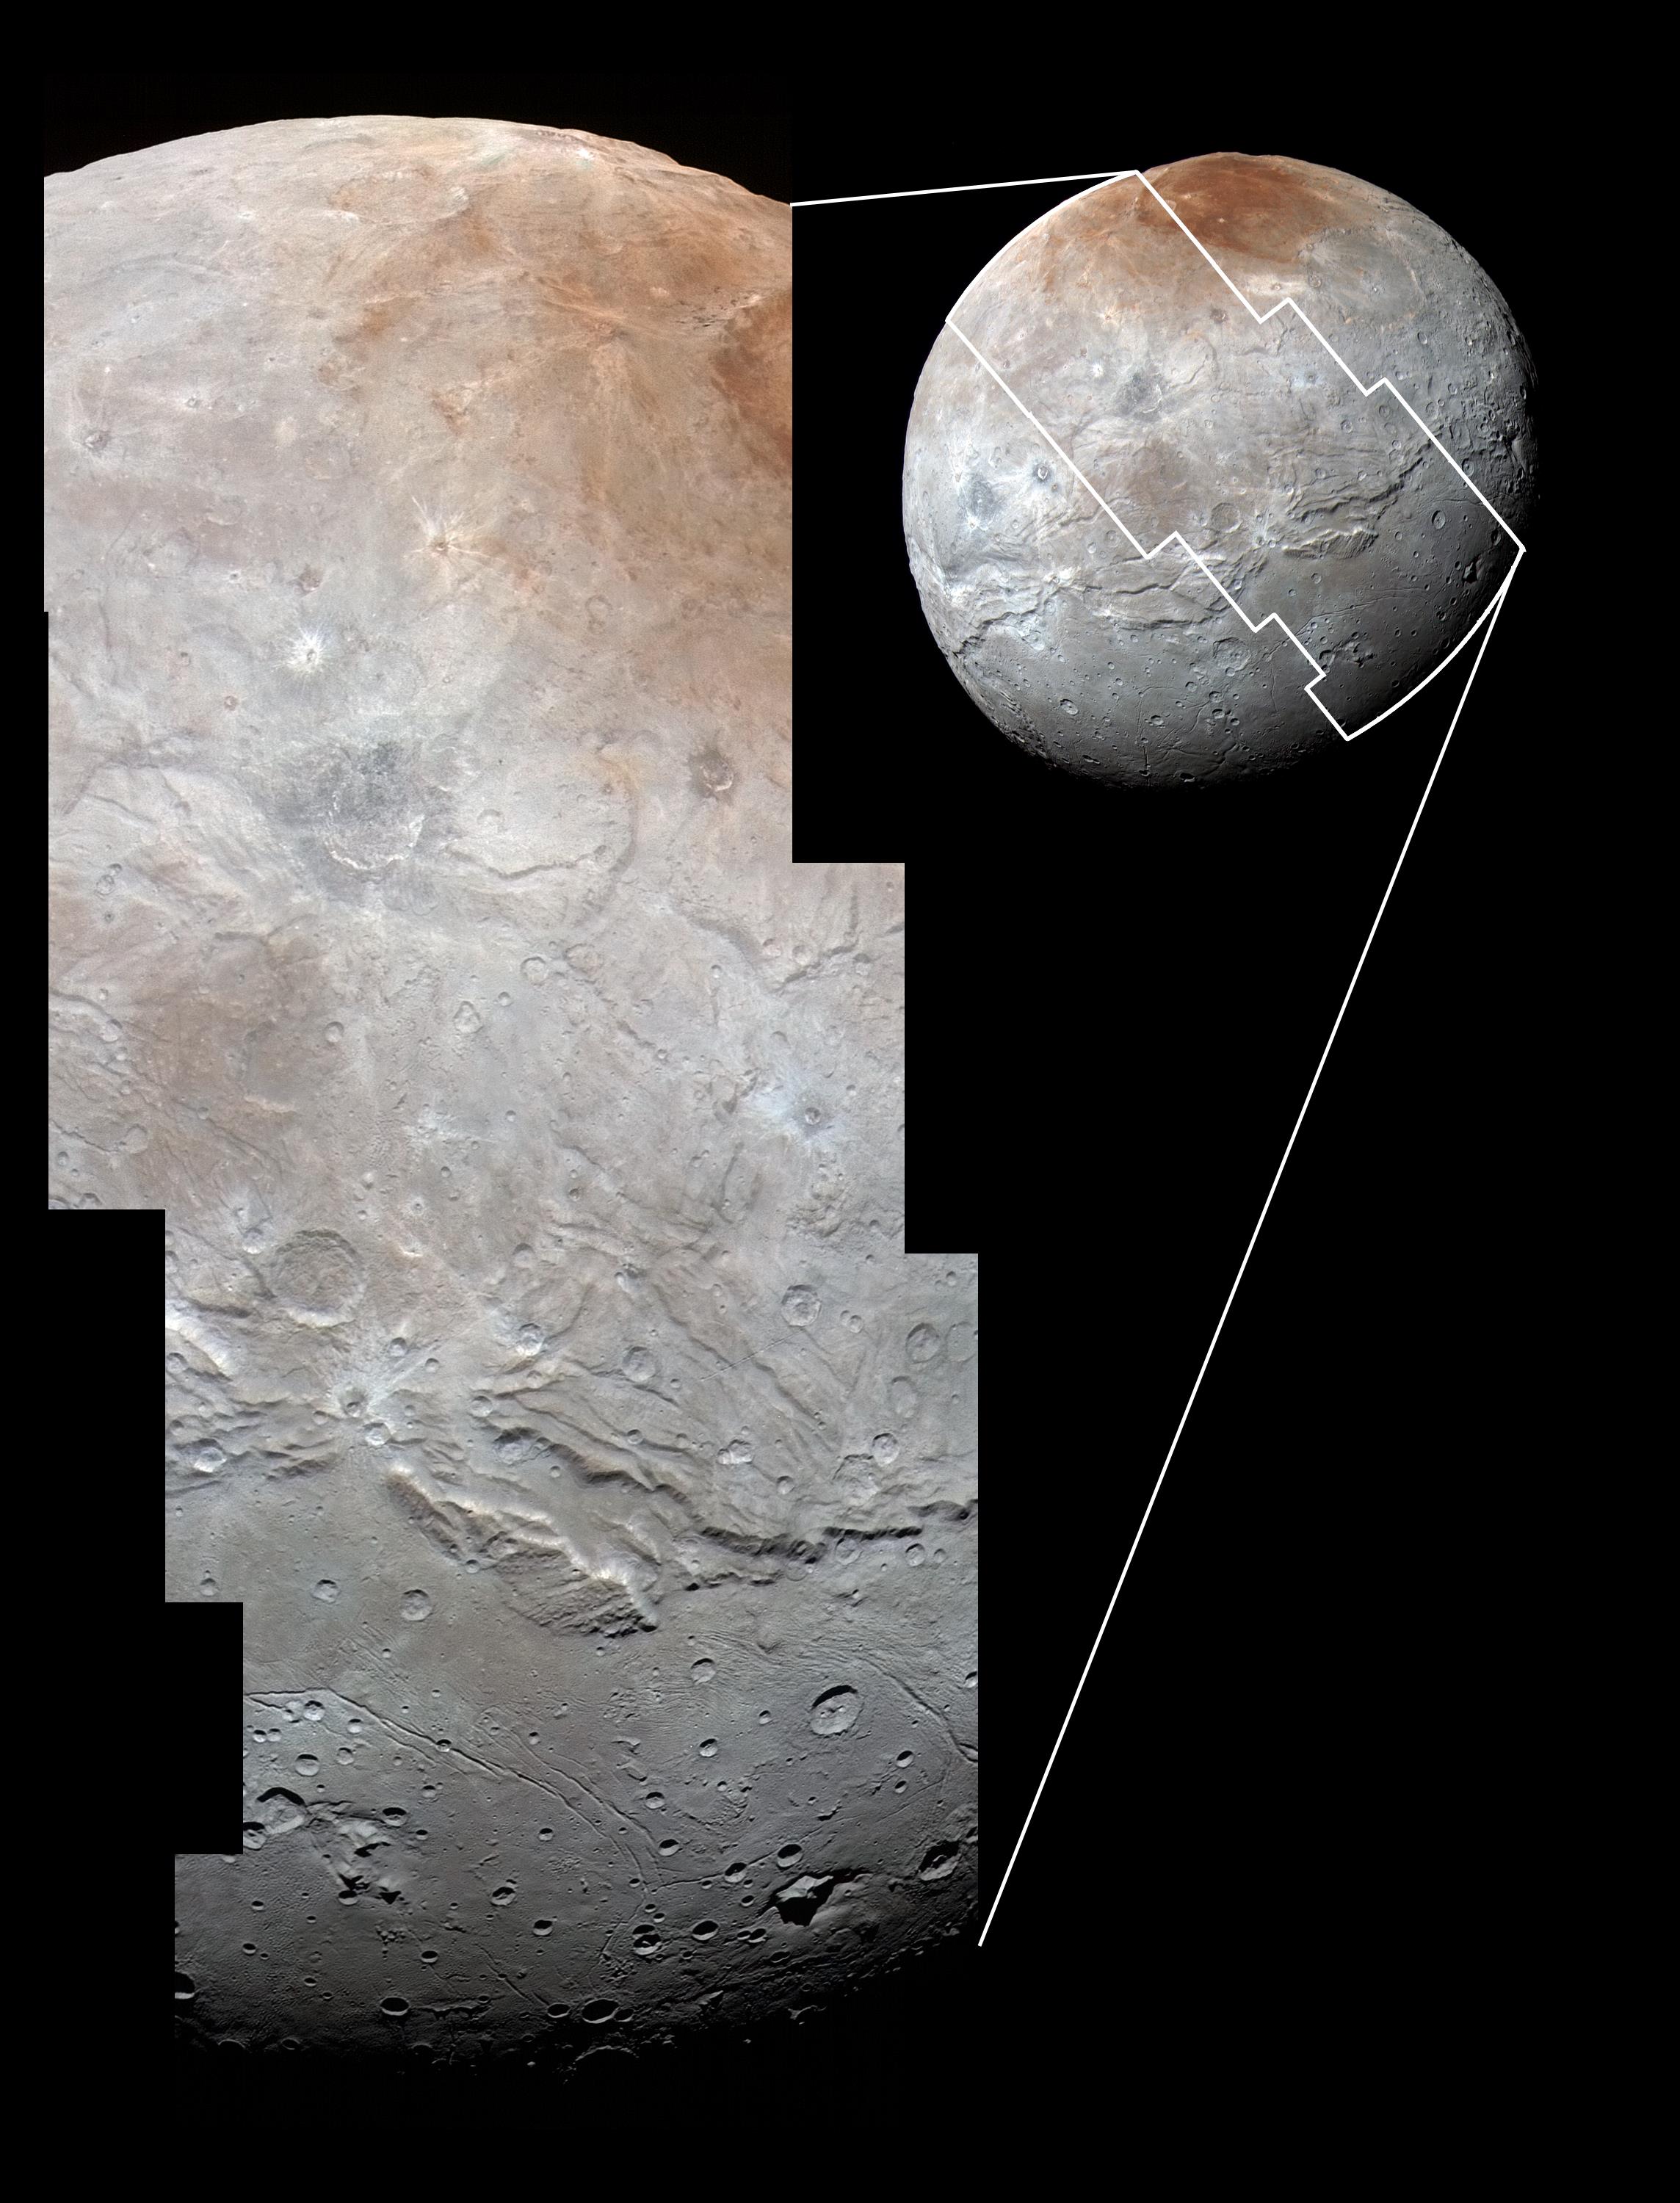 Pluto S Big Moon Charon Reveals A Colorful And Violent History Nasa